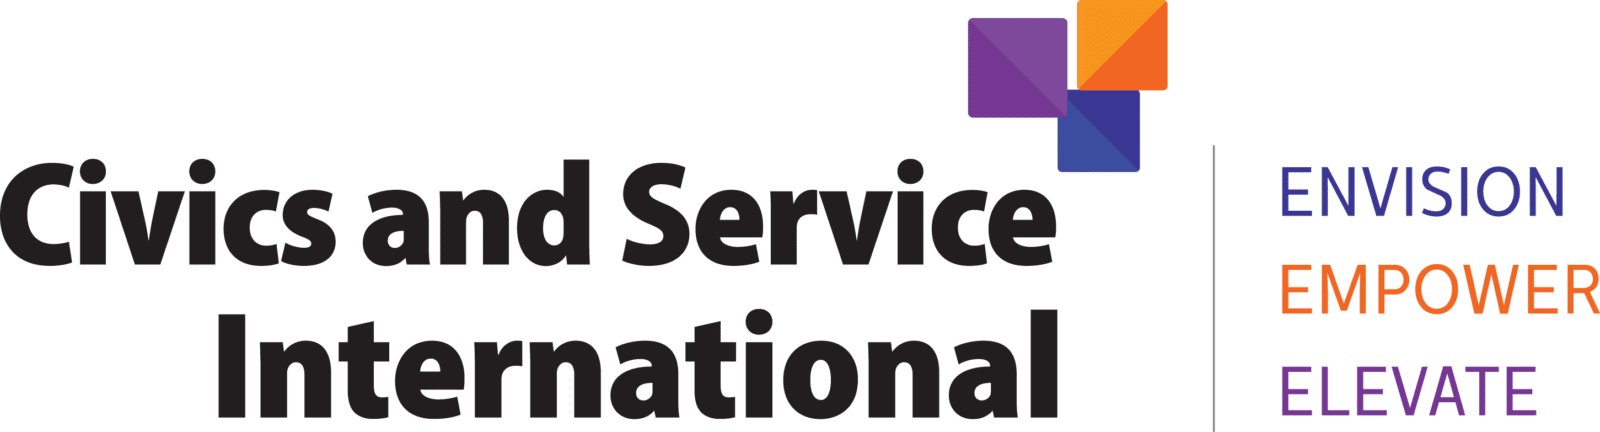 Civics and Service International logo